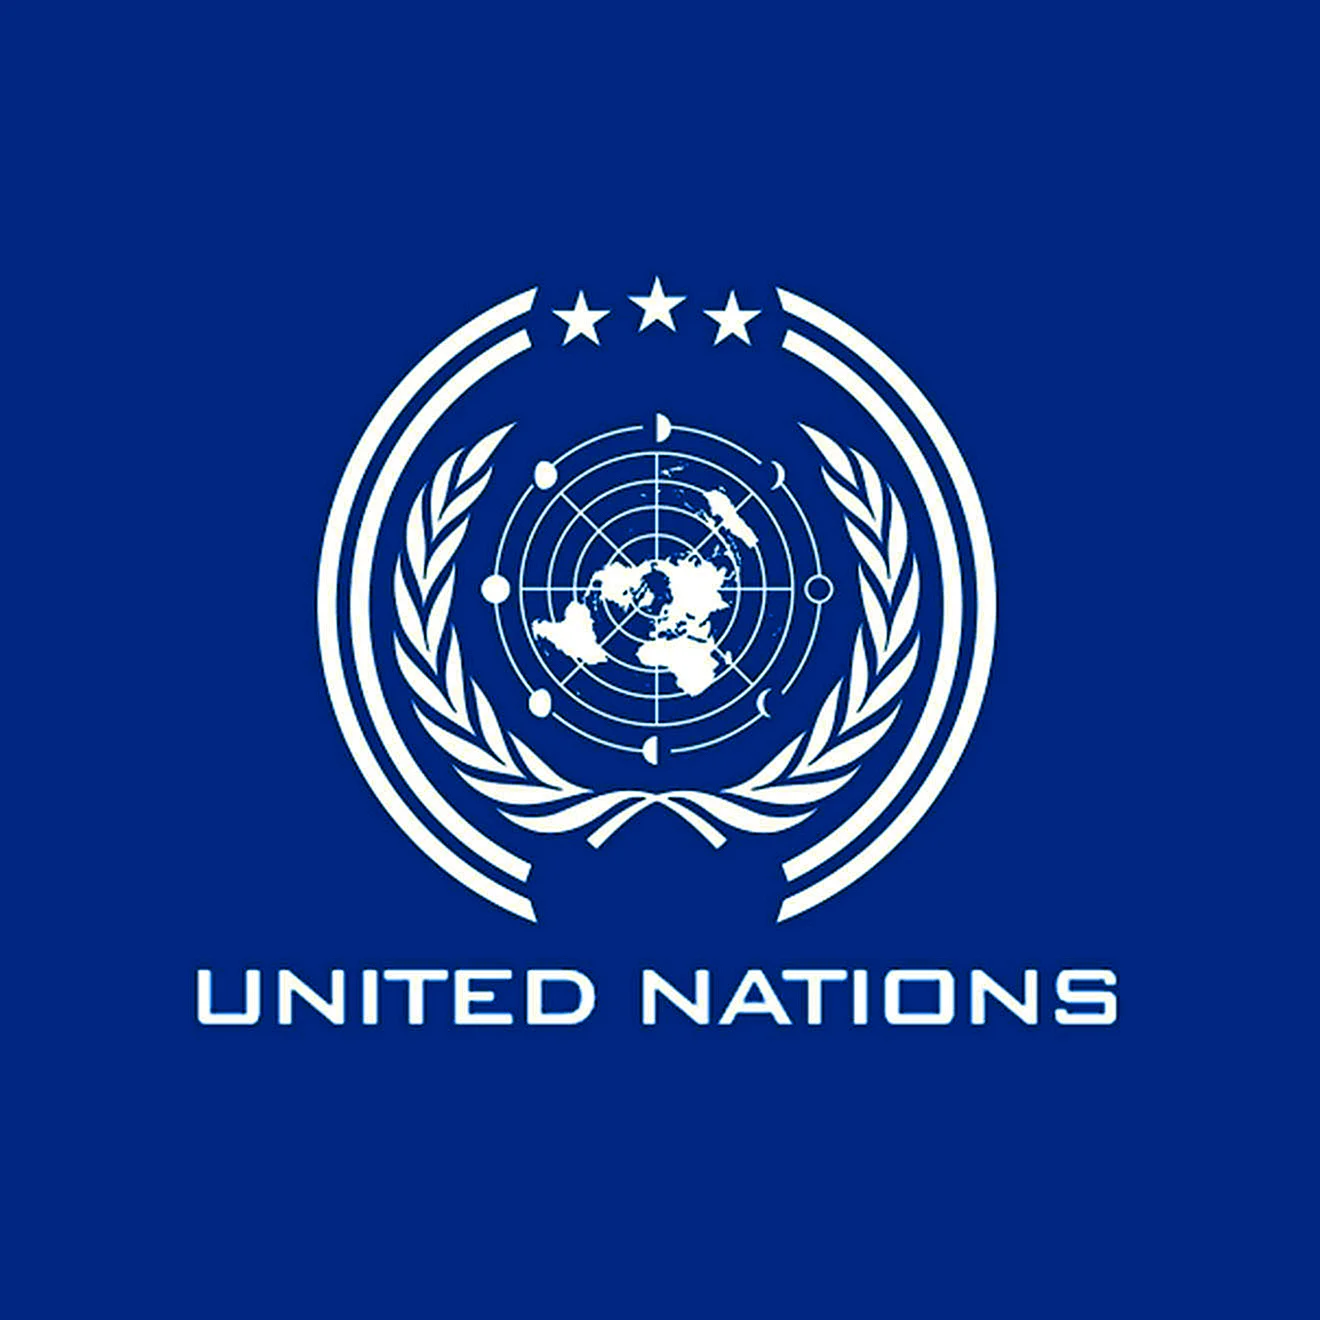 Совет безопасности ООН флаг